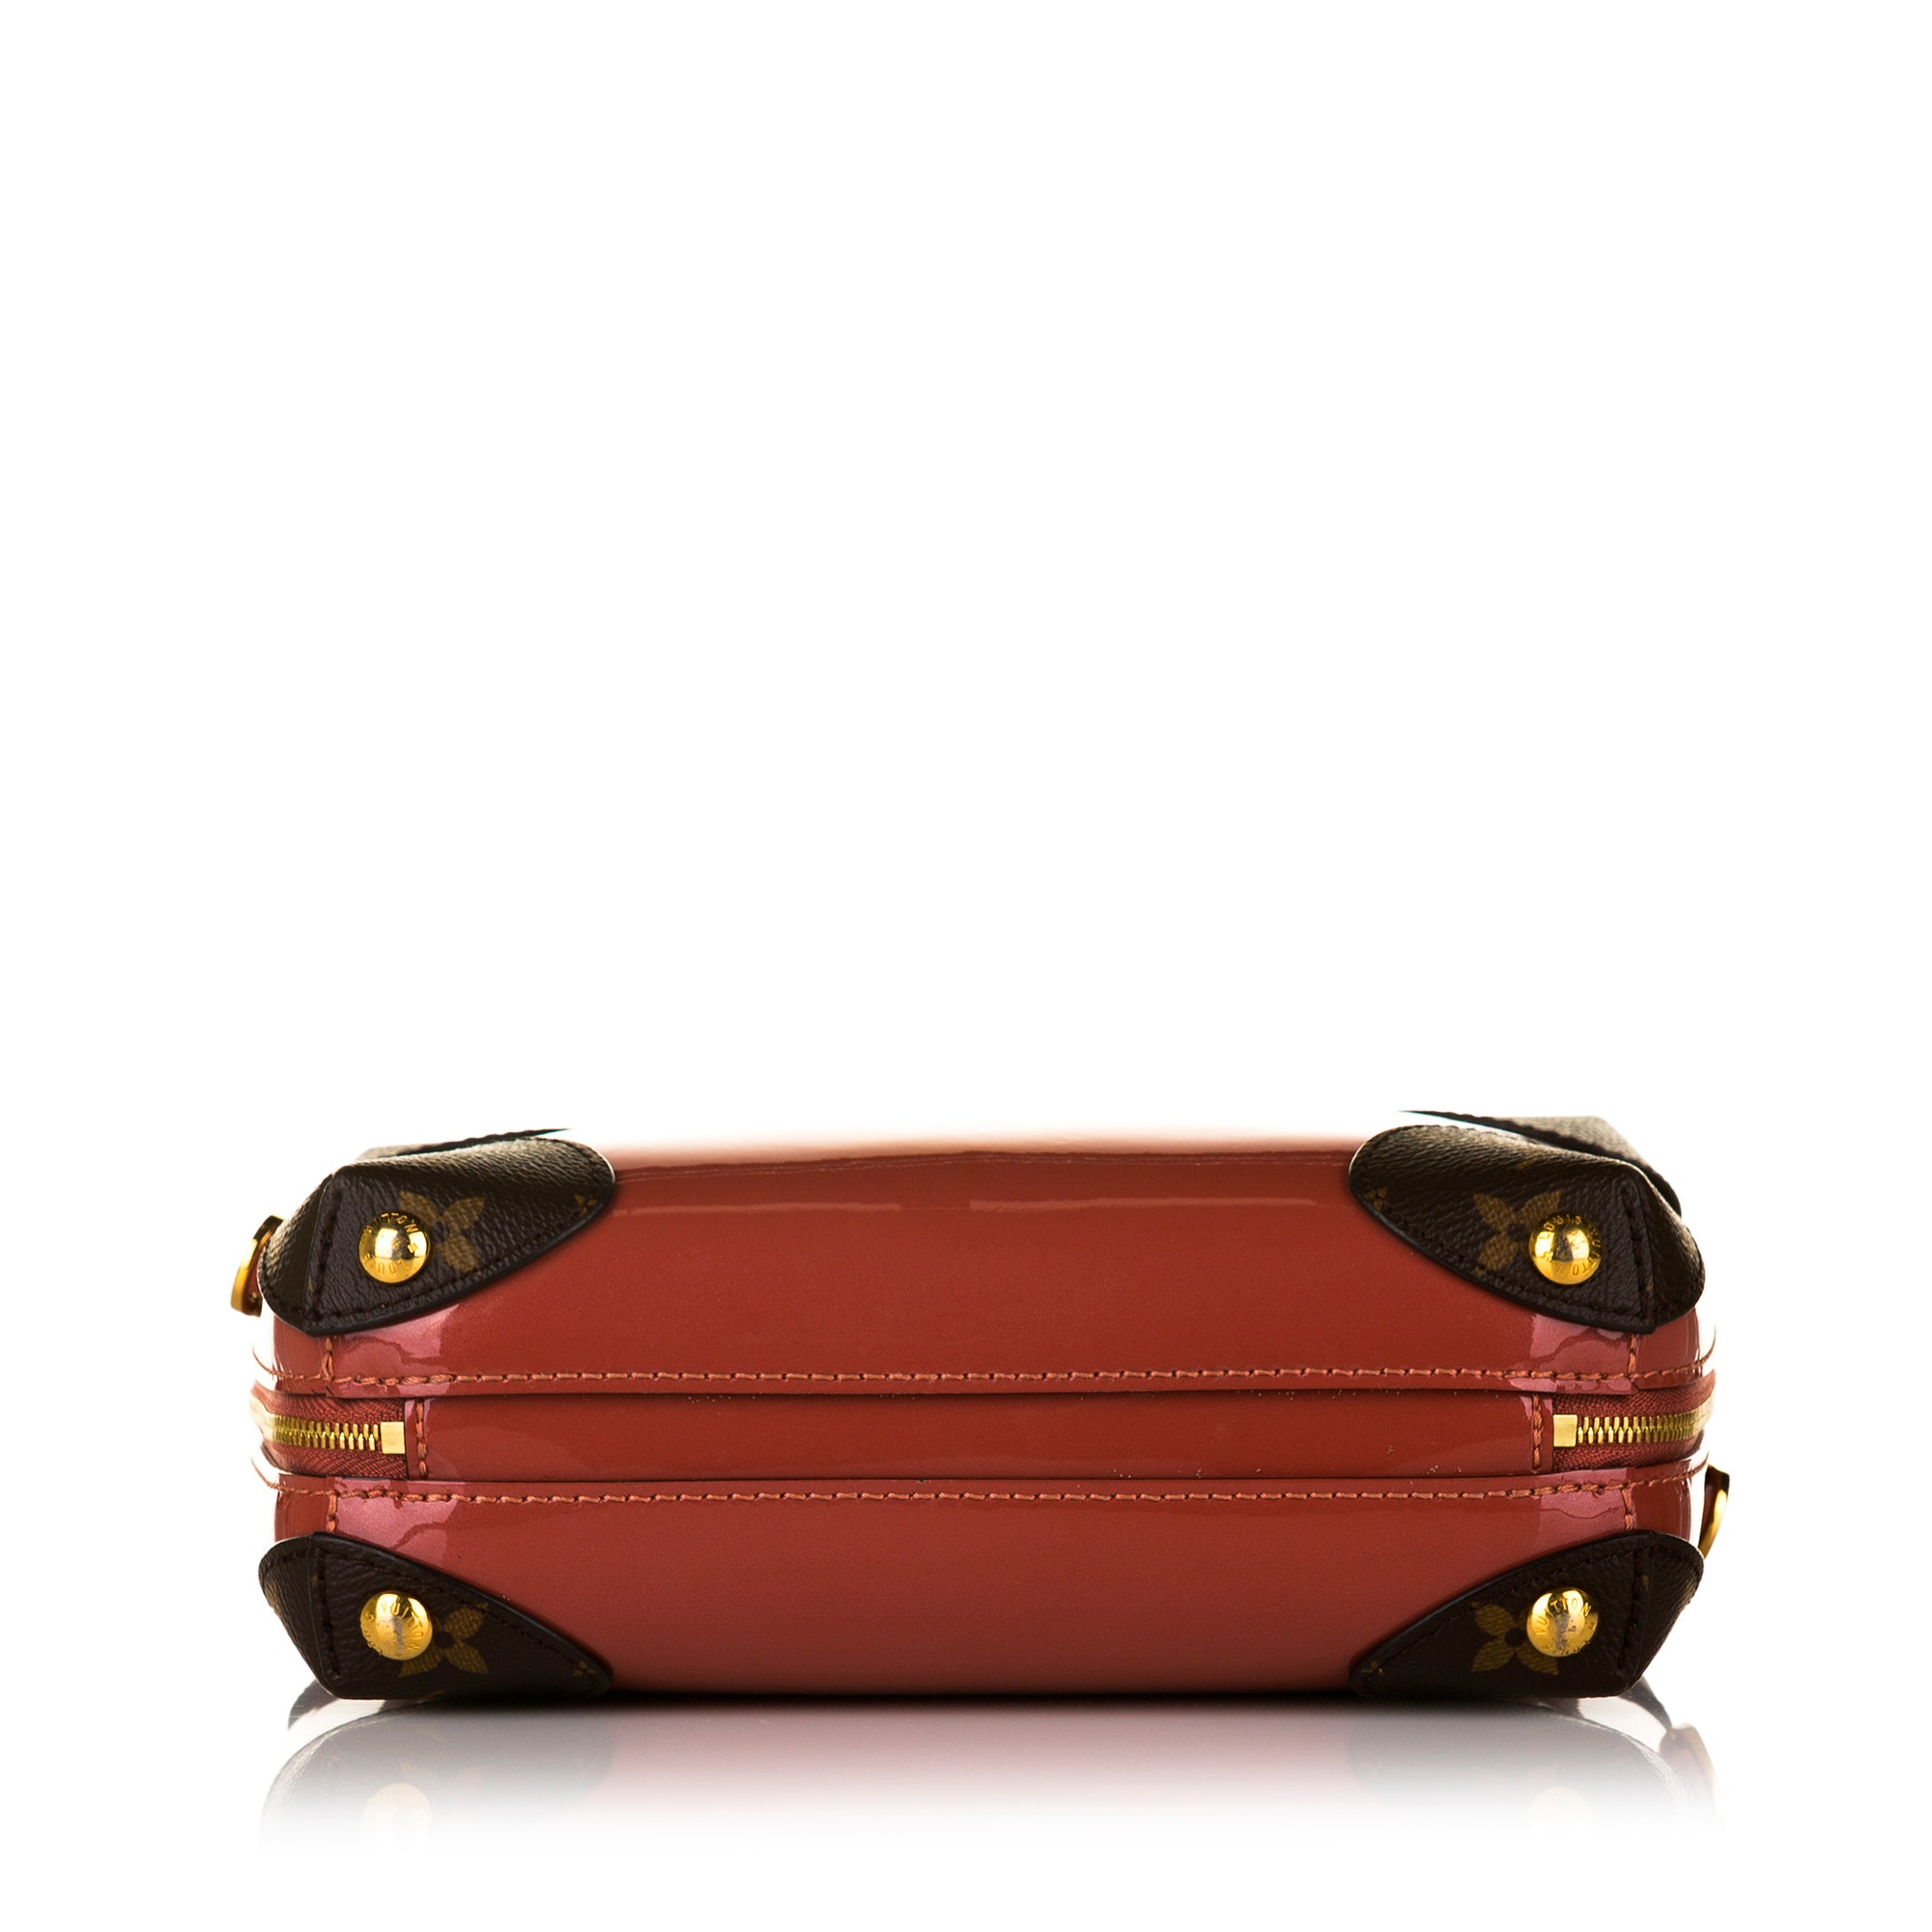 LOUIS VUITTON Handbag M54626 Tote Miroir Patent leather/Monogram